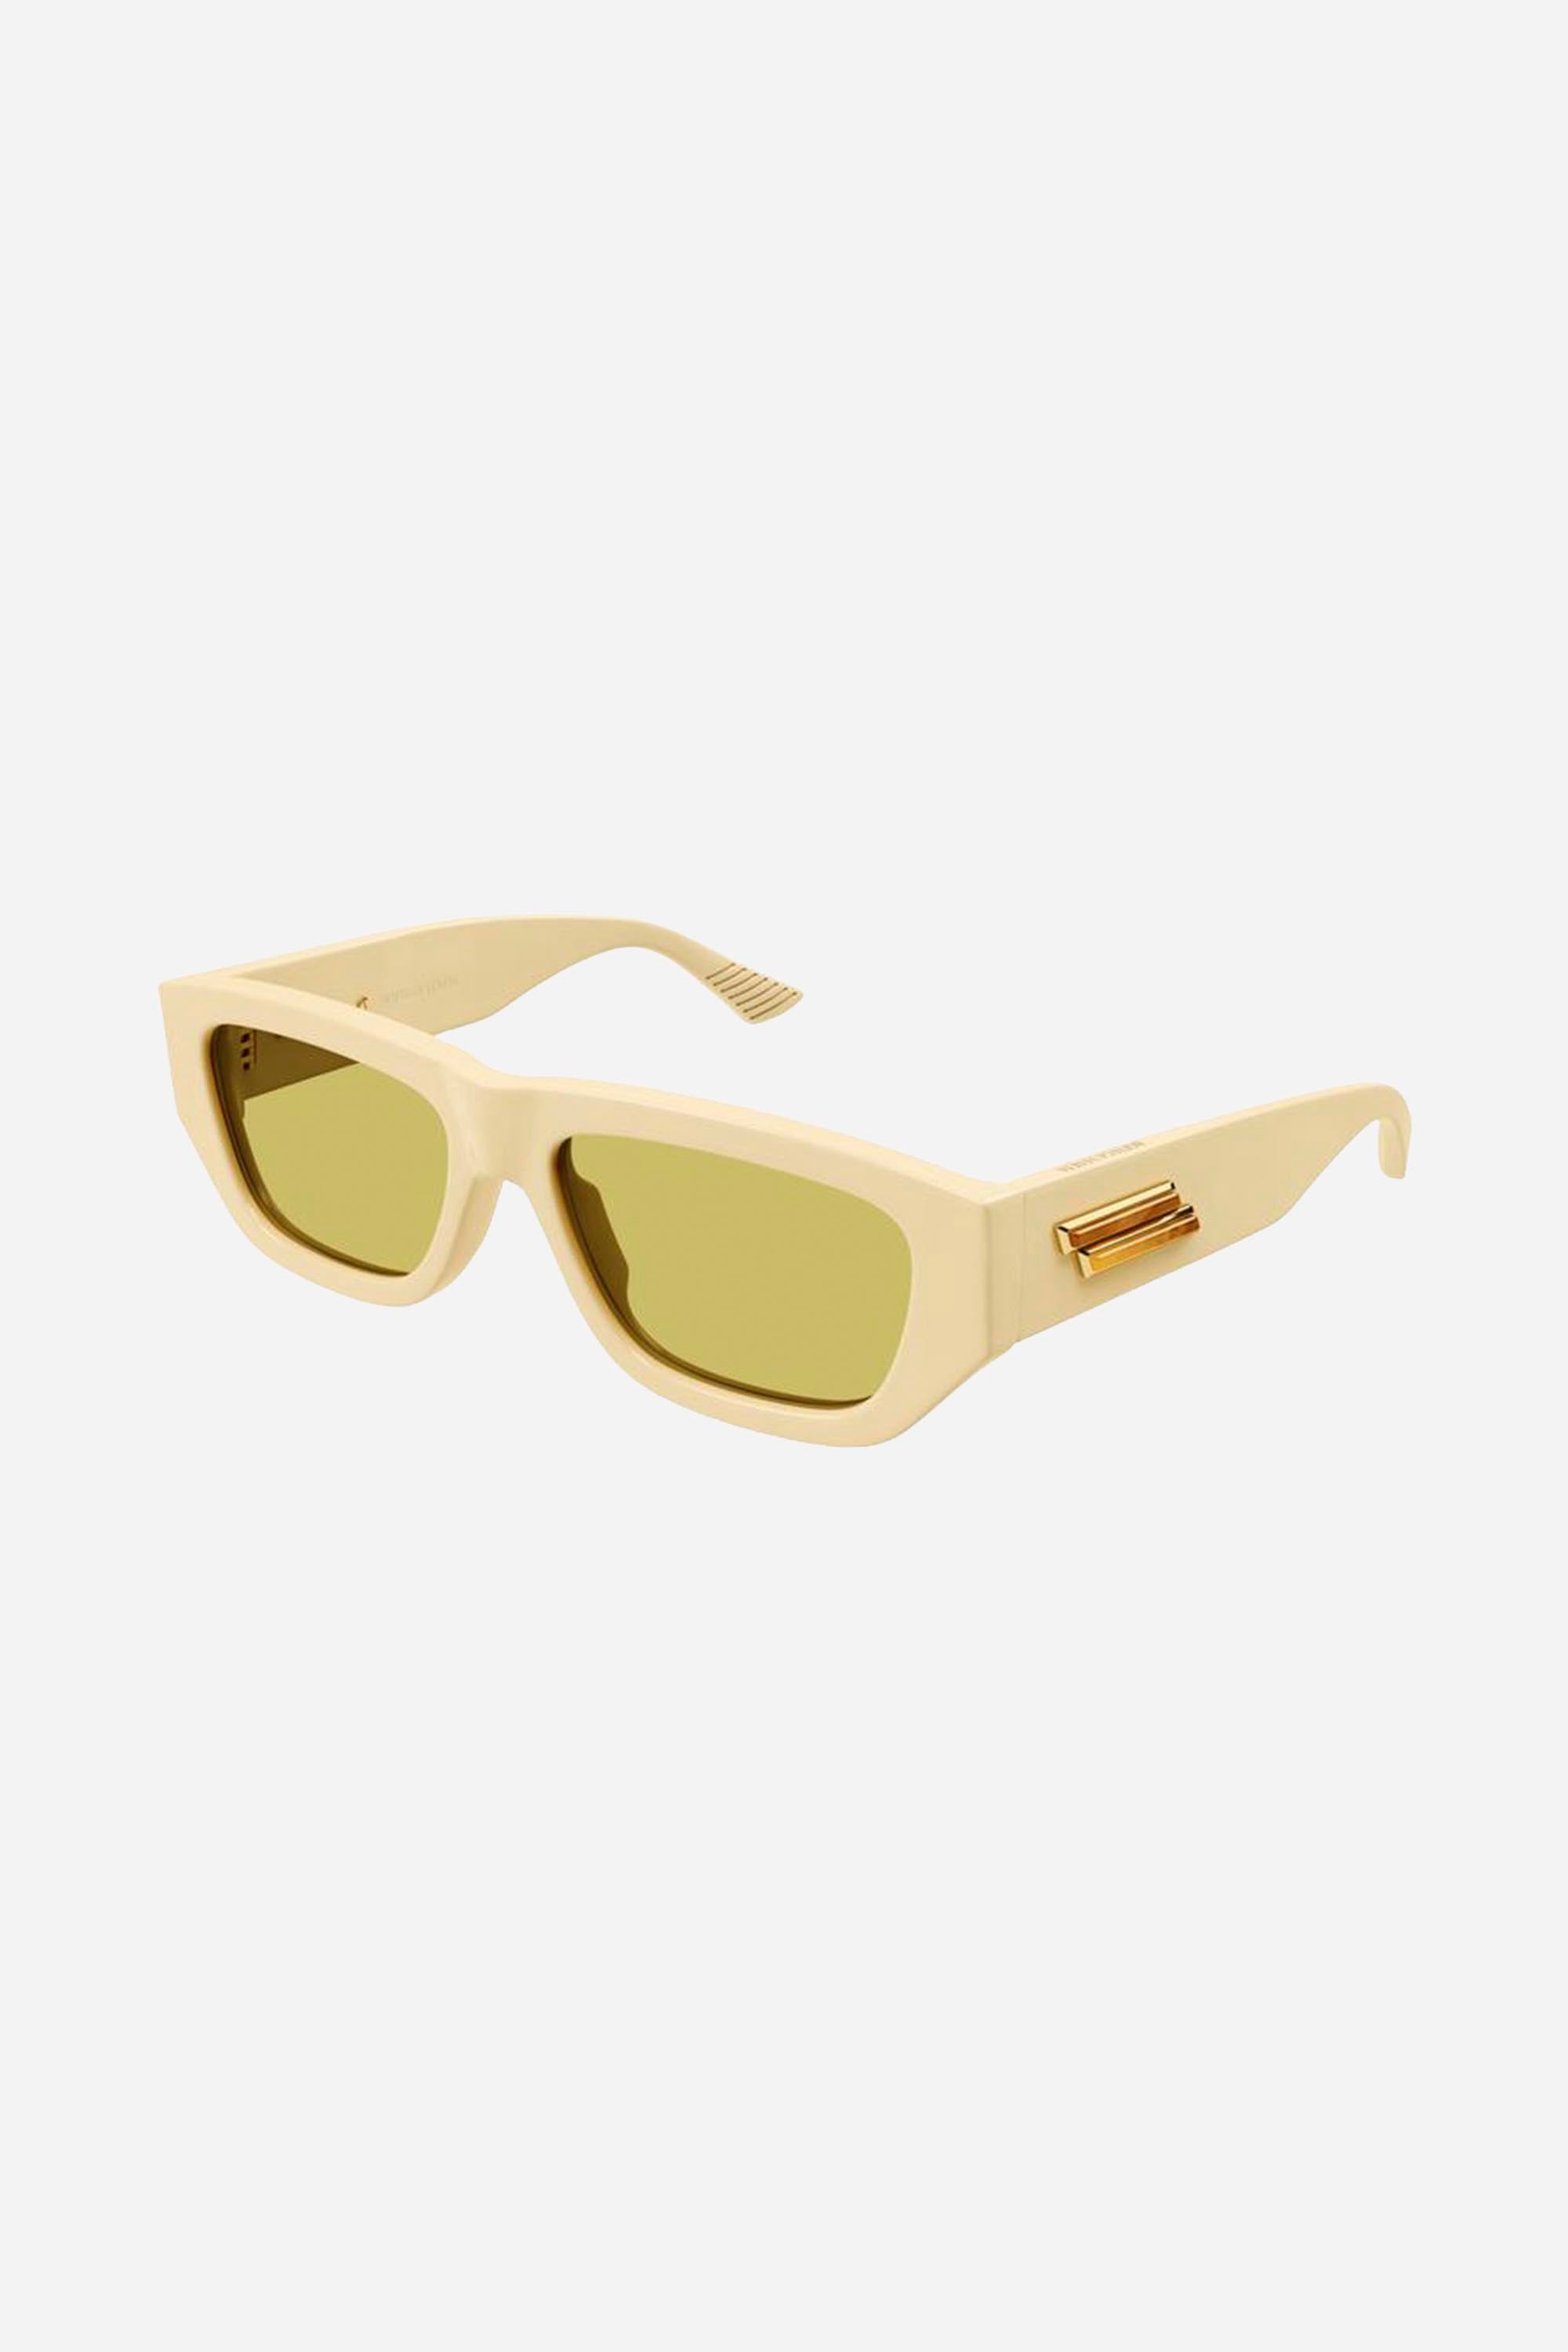 Bottega Veneta rectangular ivory sunglasses - Eyewear Club